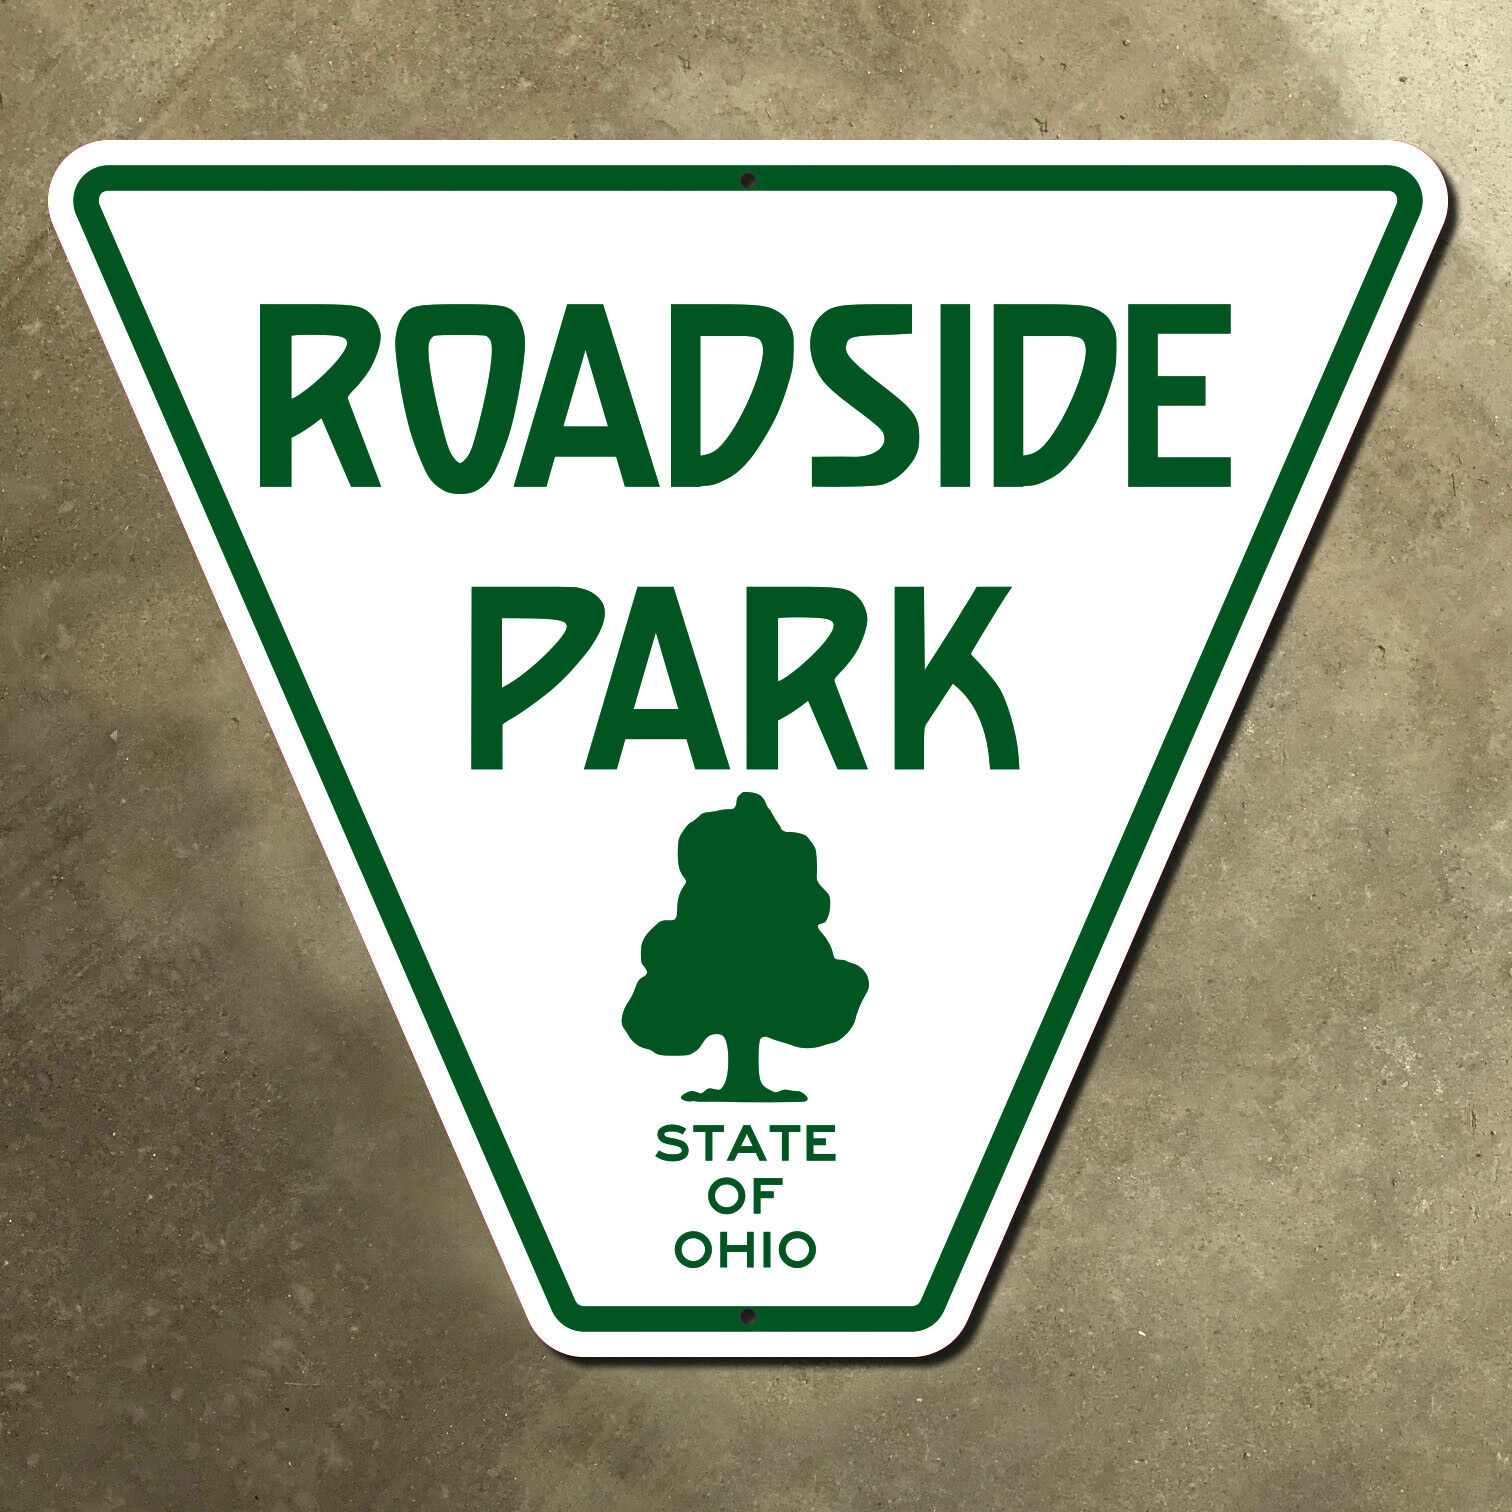 Ohio Roadside Park marker road highway sign tree rest picnic area 17x15